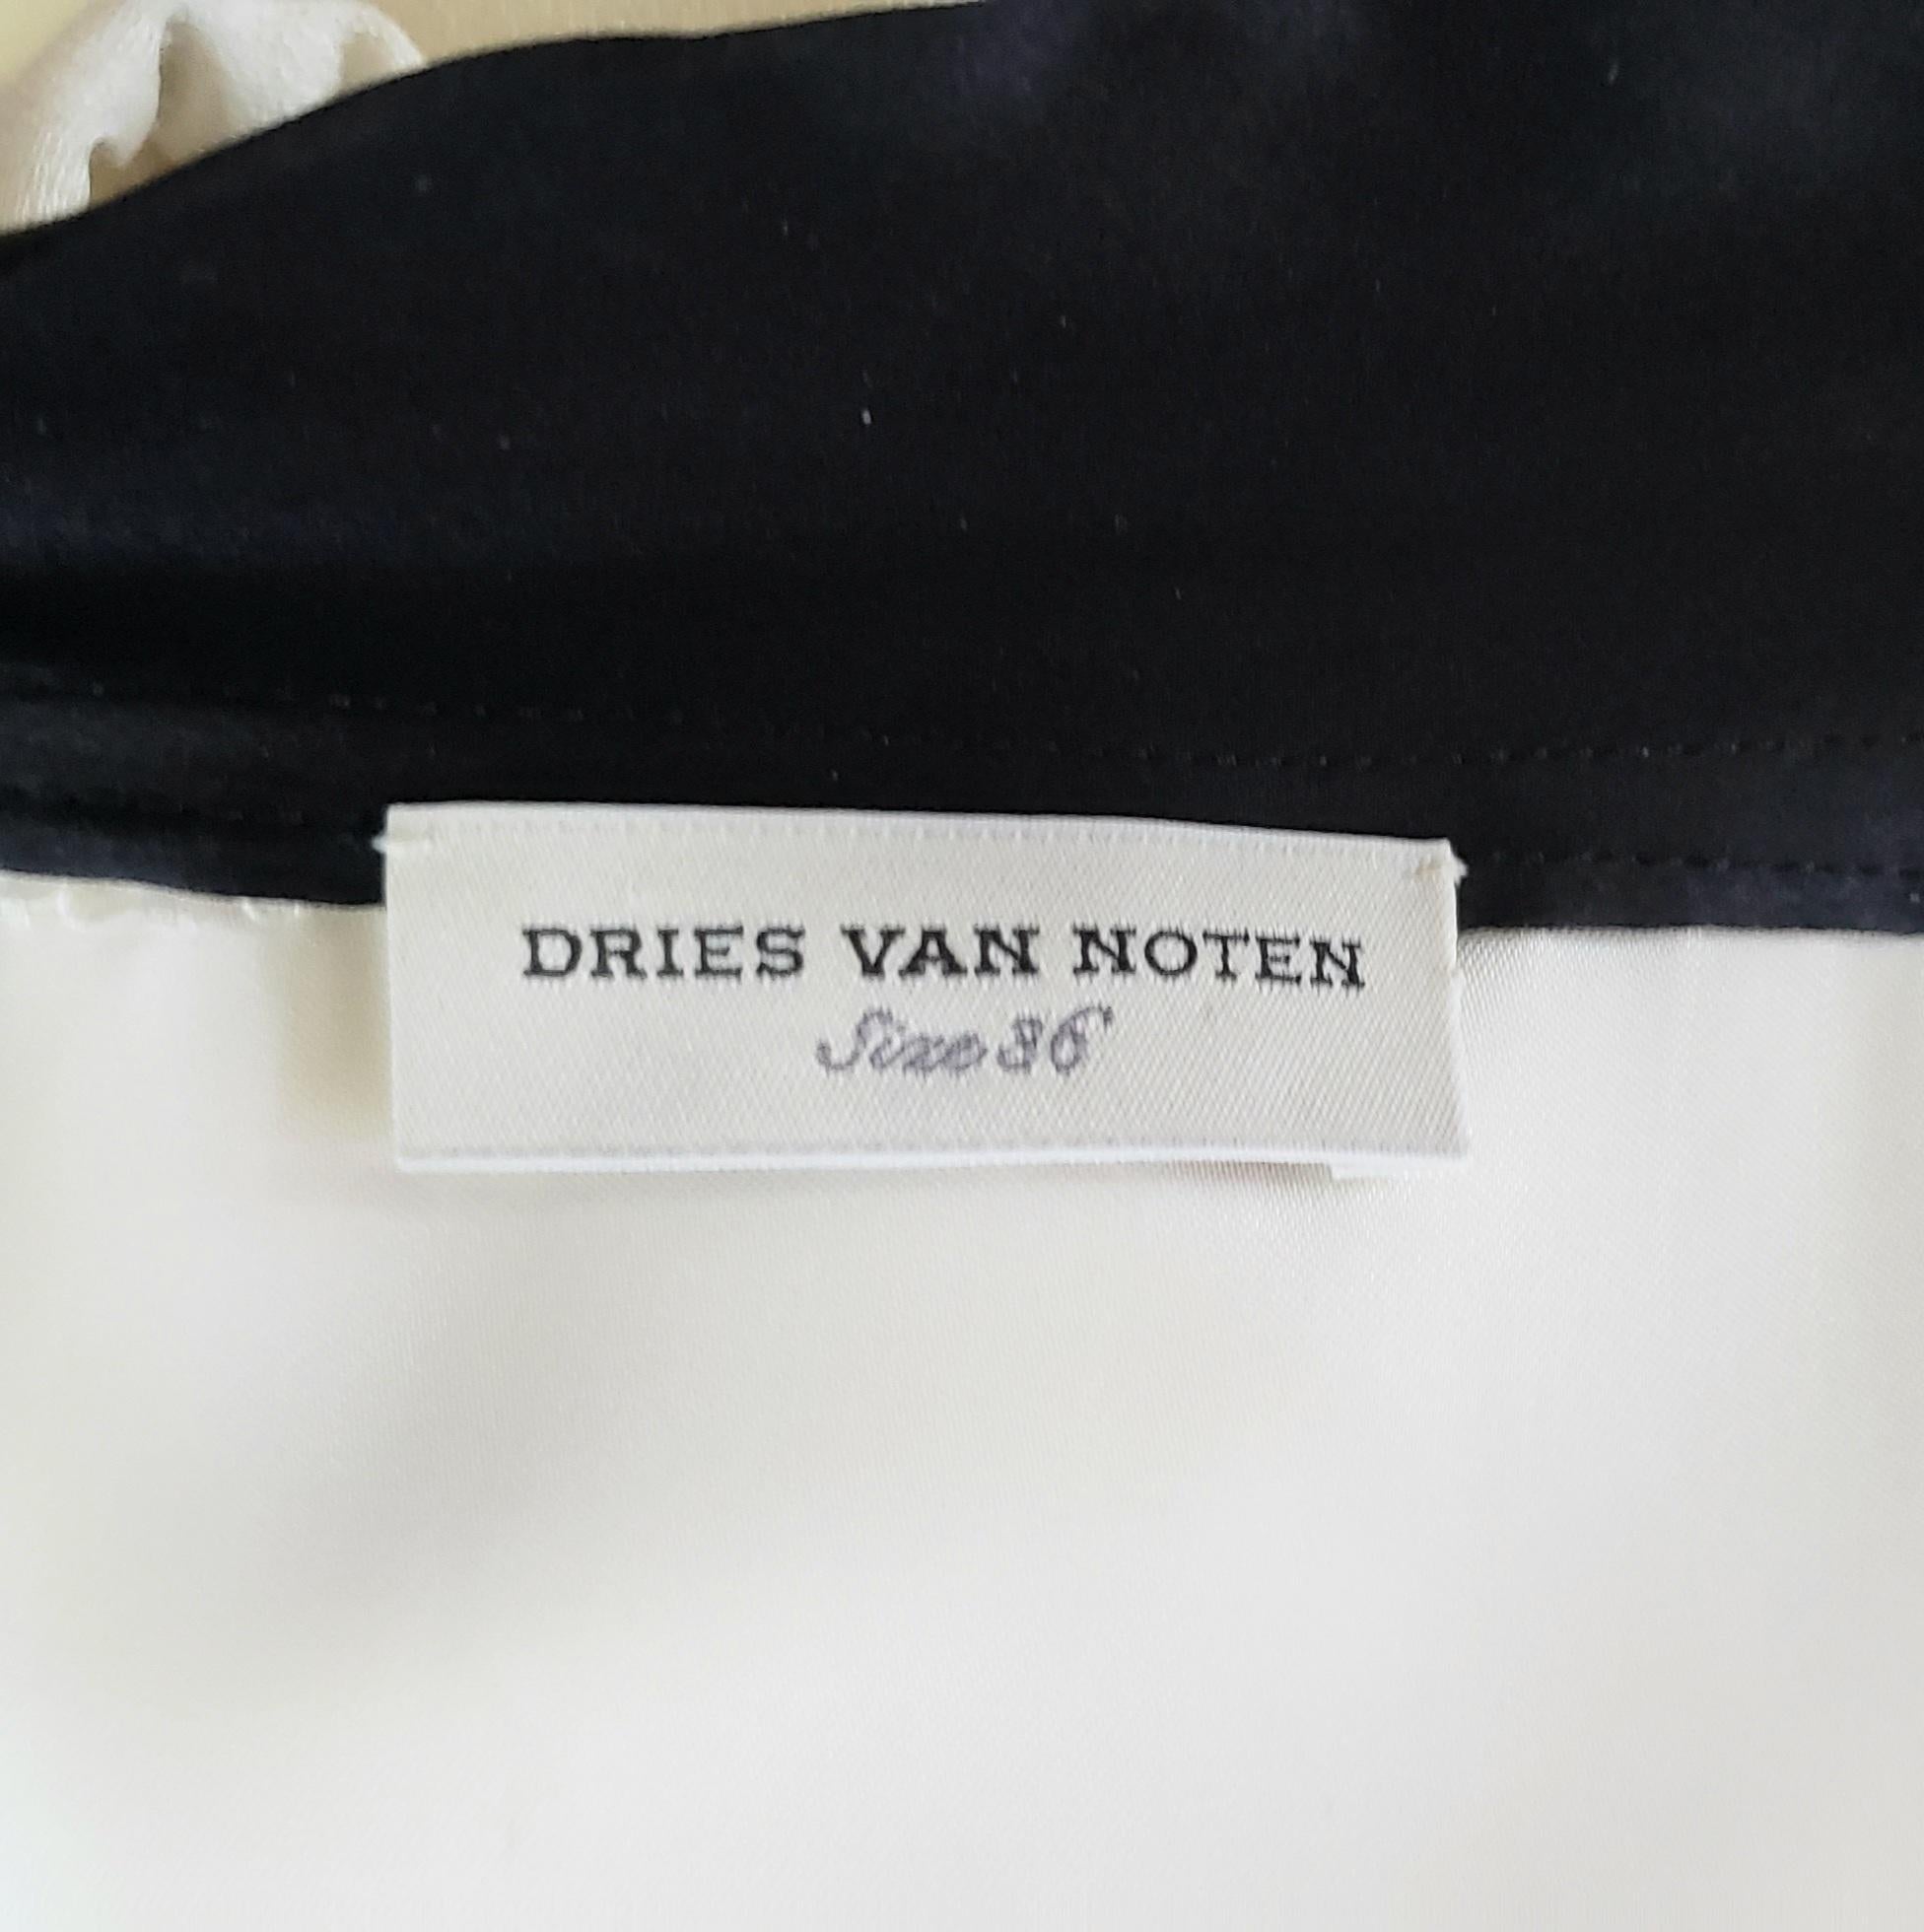 DRIES Van NOTEN Fall 2012 SILK DRESS size 36 - S For Sale 6